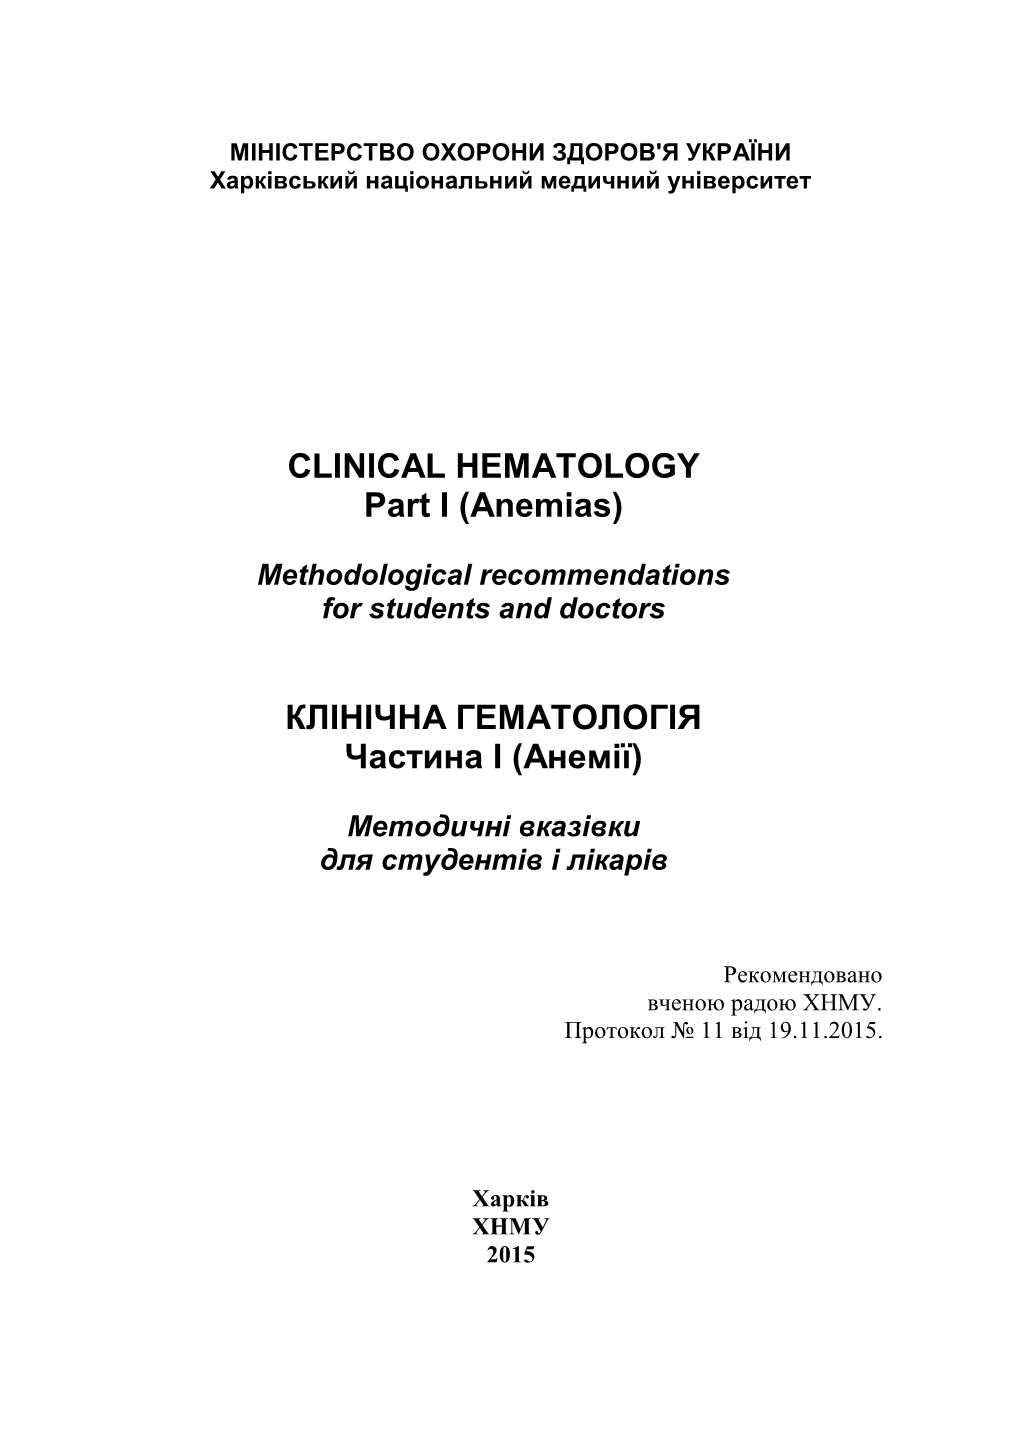 CLINICAL HEMATOLOGY Part I (Anemias) КЛІНІЧНА